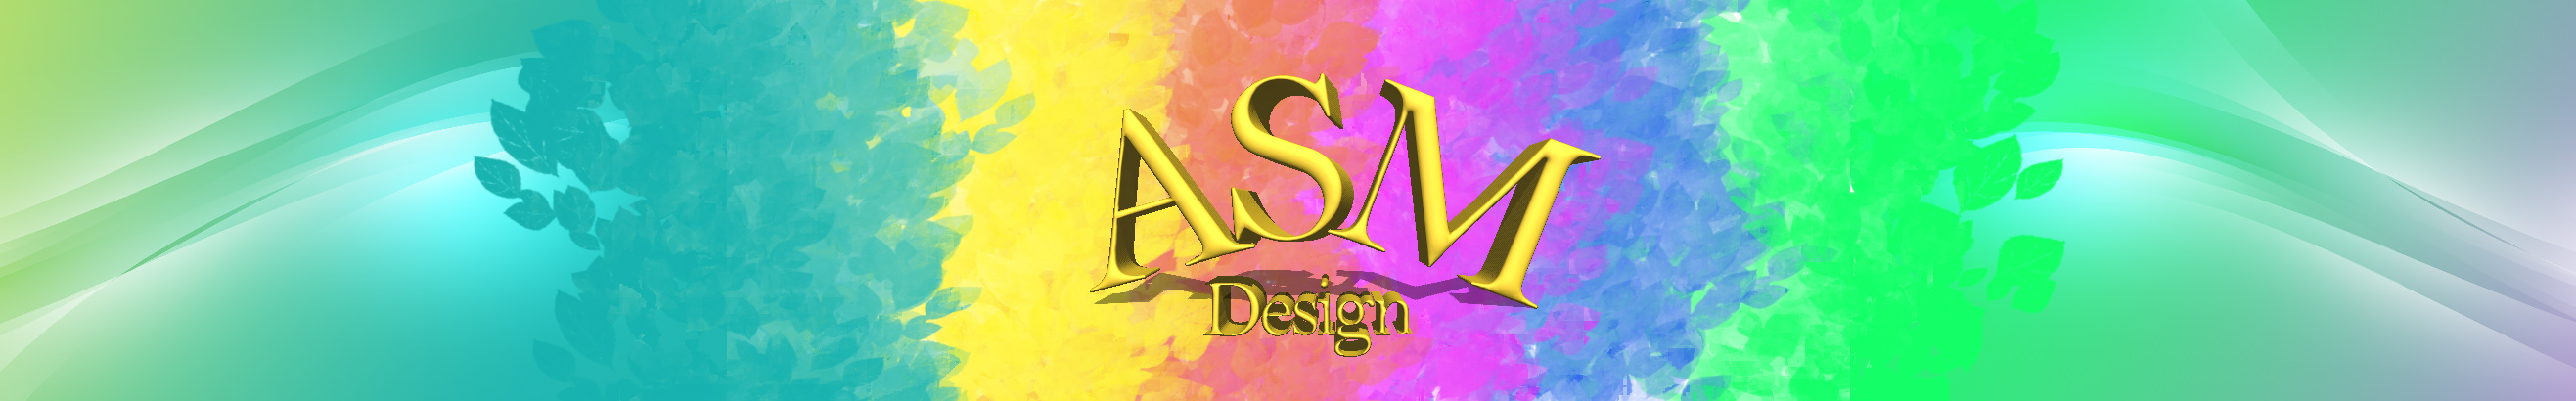 ASM Design's profile banner